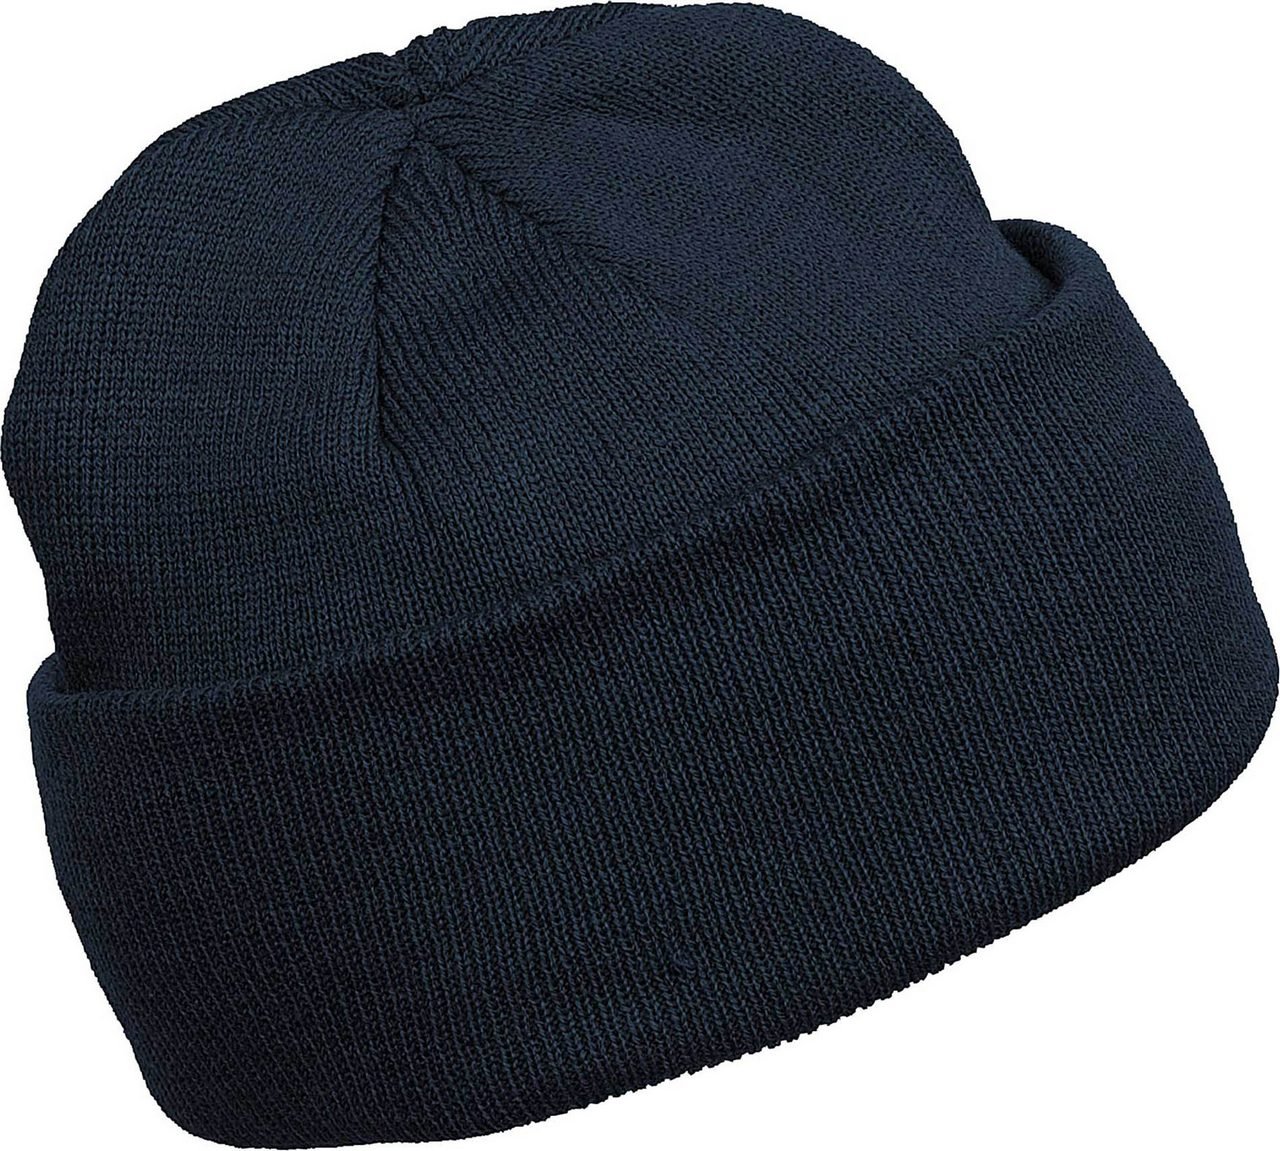  Caciula Knittedknitted-hat-3084.jpg